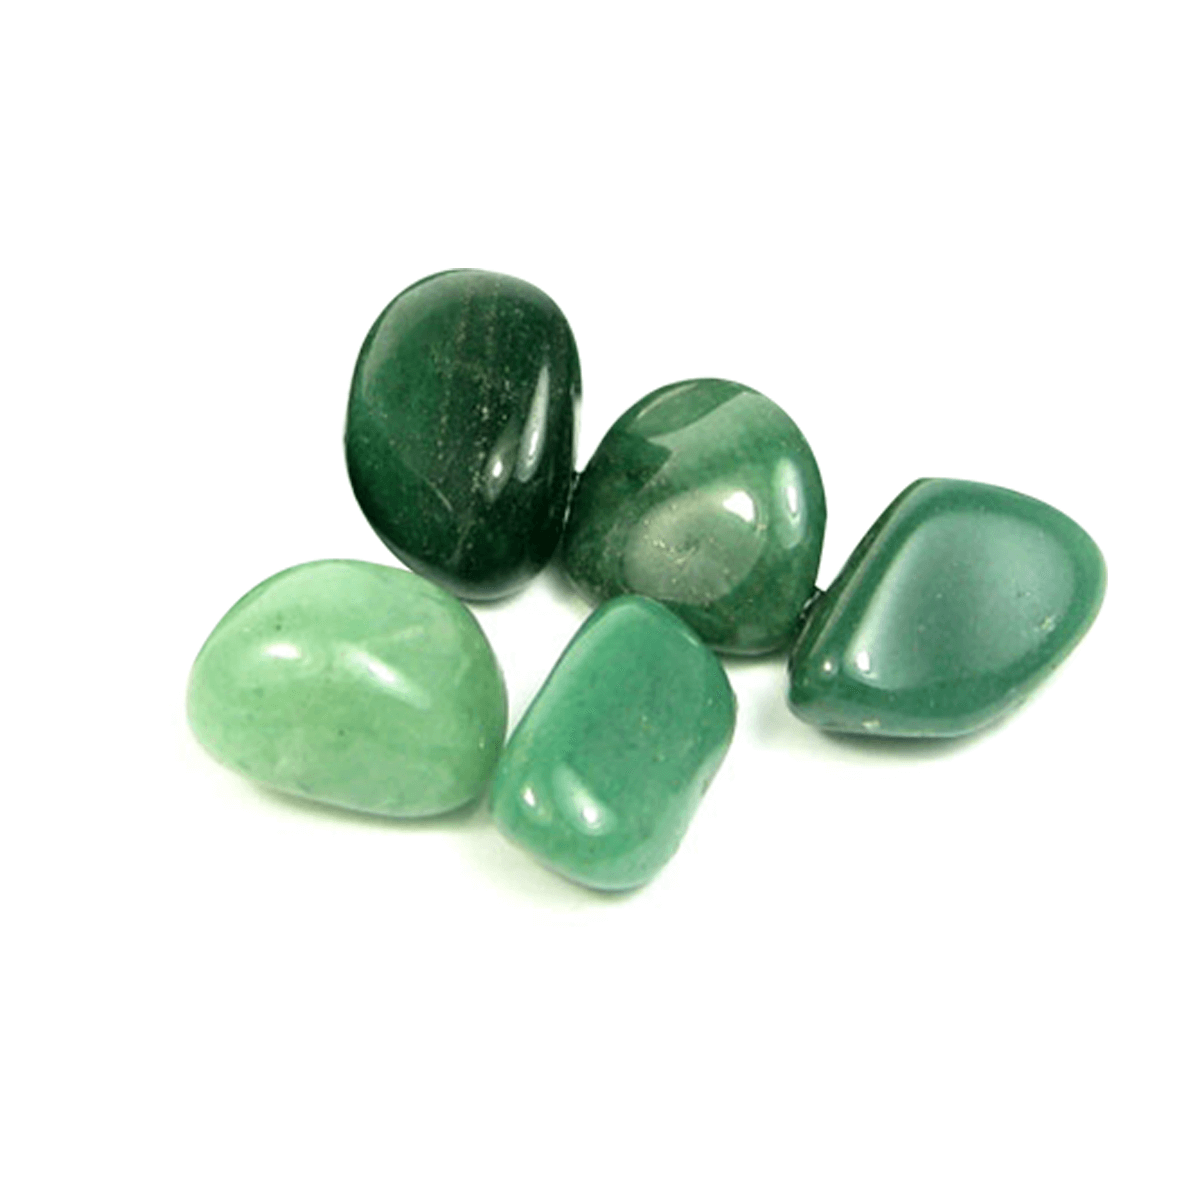 Green Aventurine Tumbled Pebbles Basket Reiki Healing Crystals Decorative Showpiece - 10 cm  (Stone, Green)